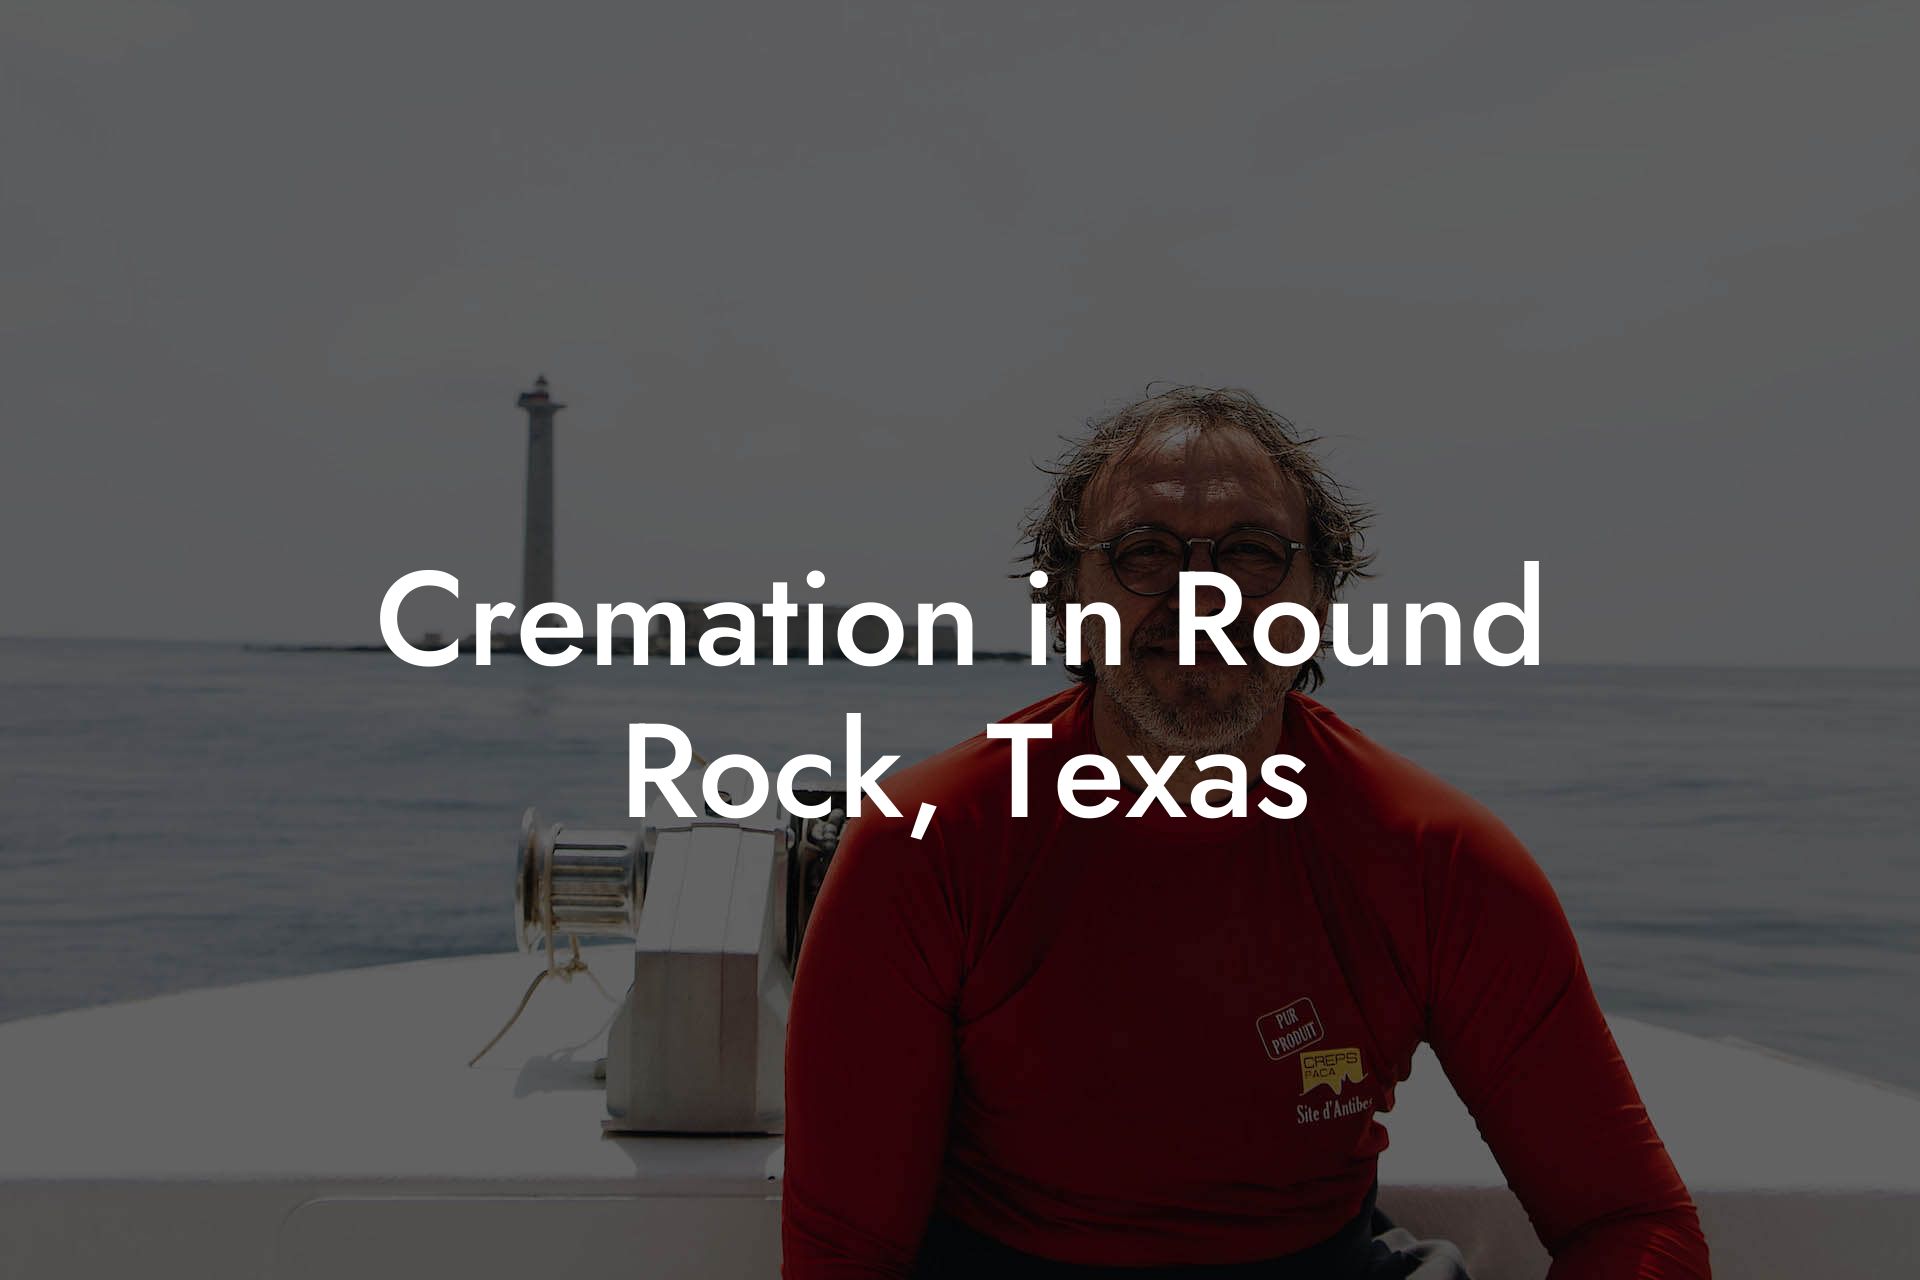 Cremation in Round Rock, Texas